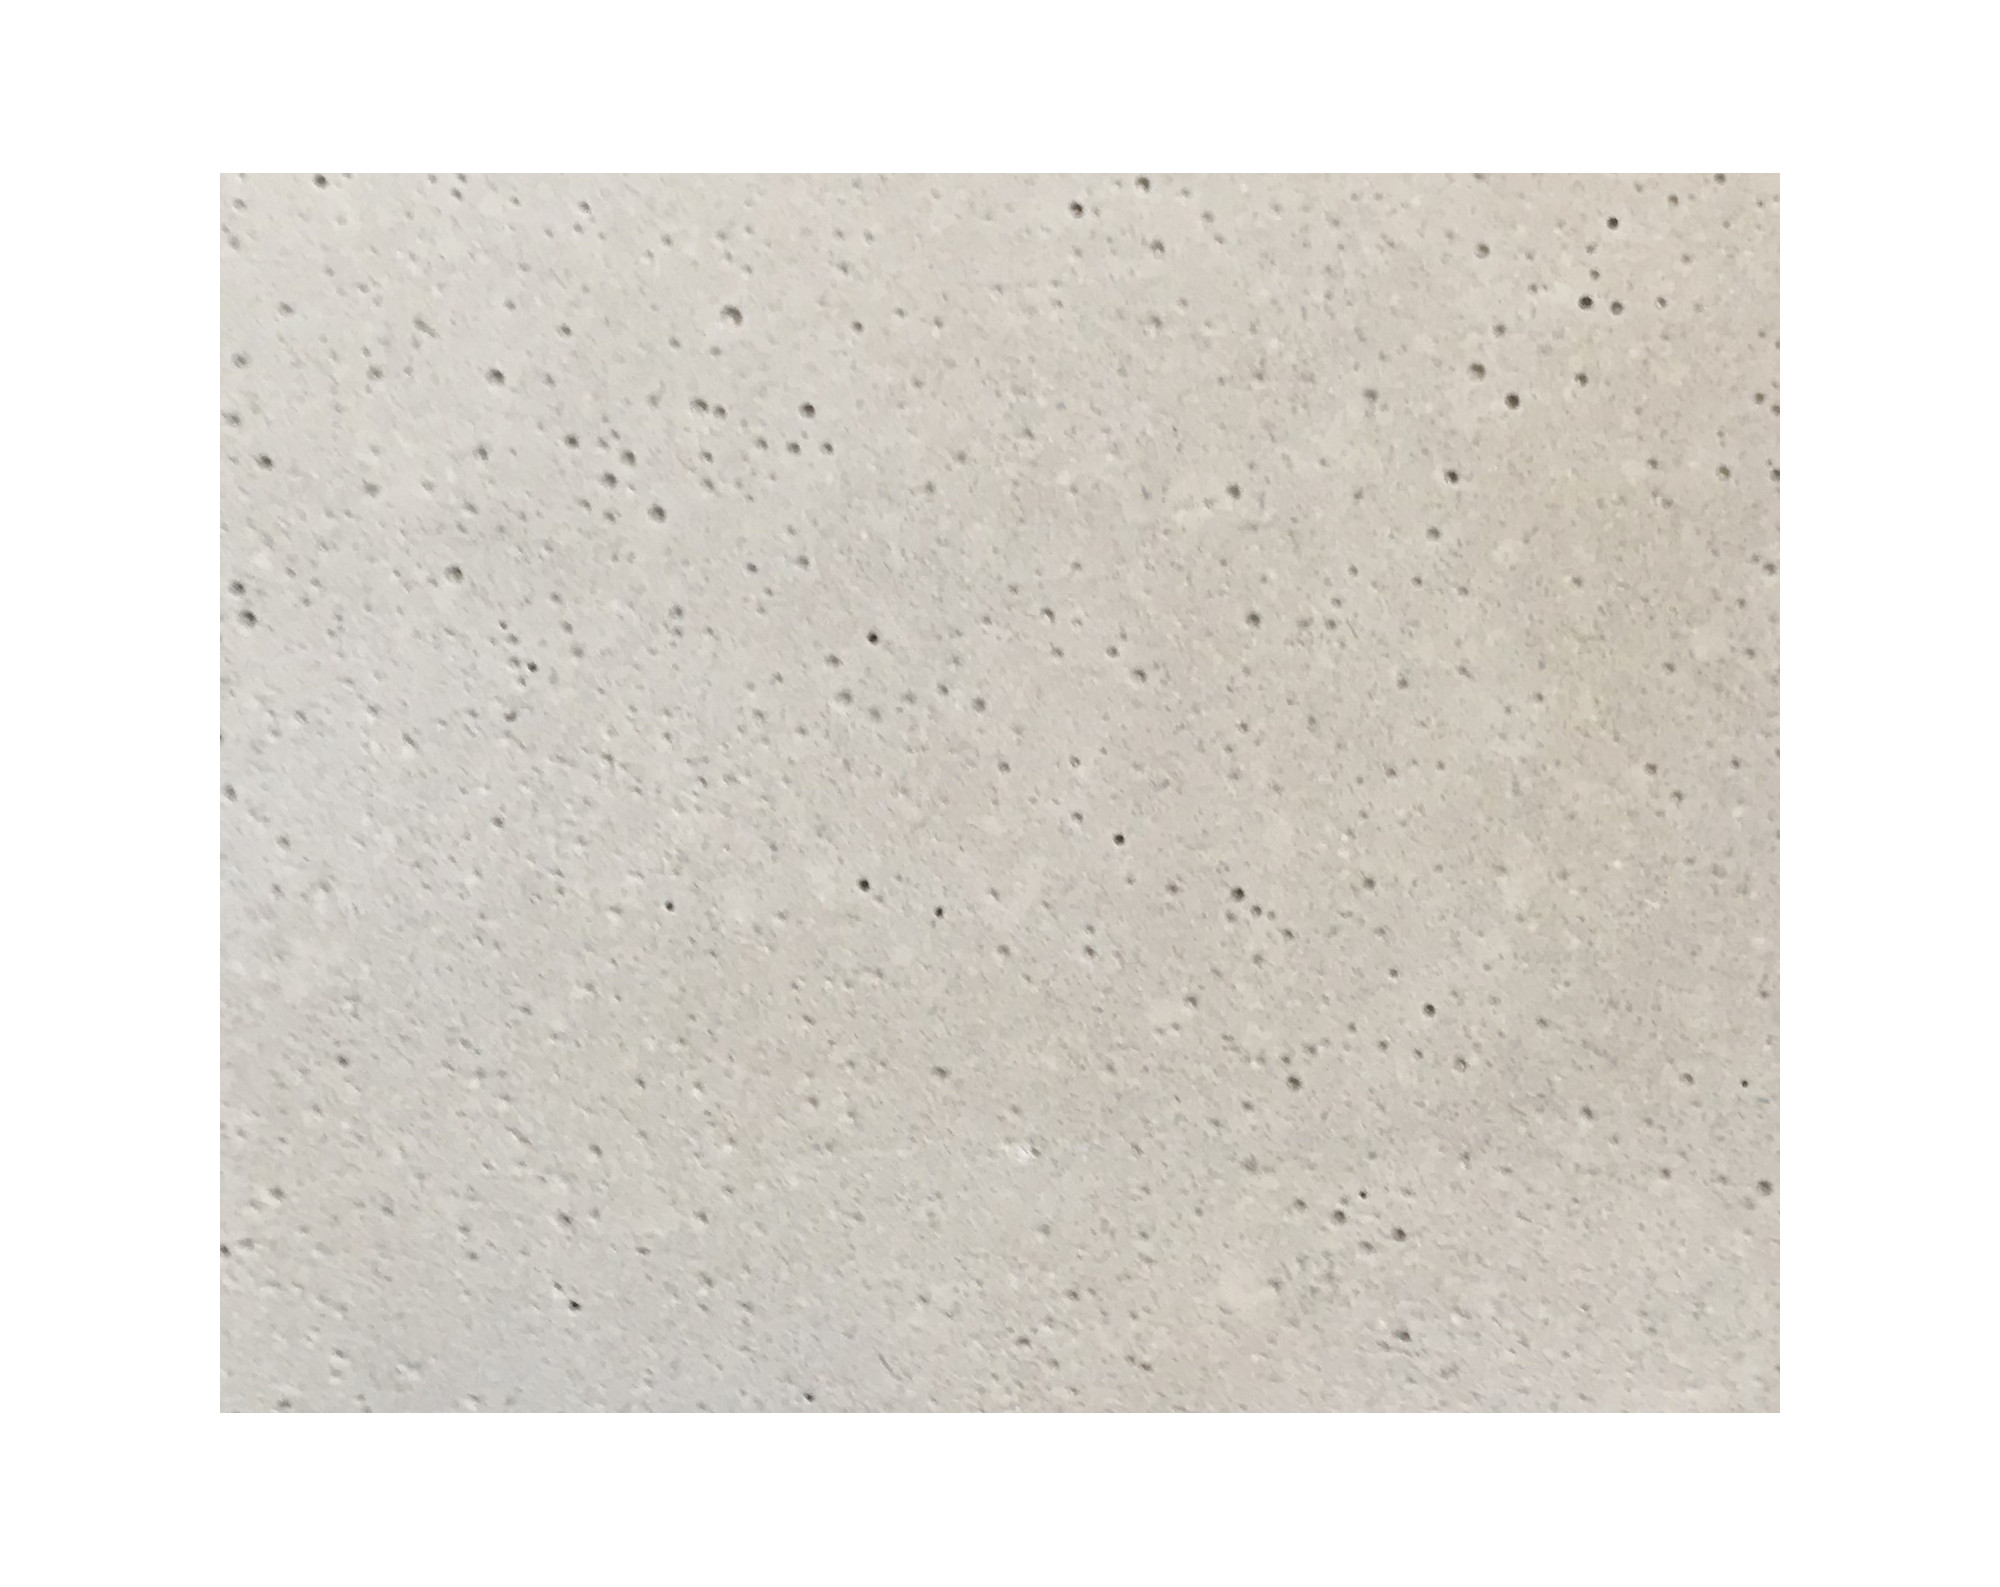 Harmo roc spartaset, olympia-serie, 8-vormig d:4,60mx7,25m, indisch wit, beton